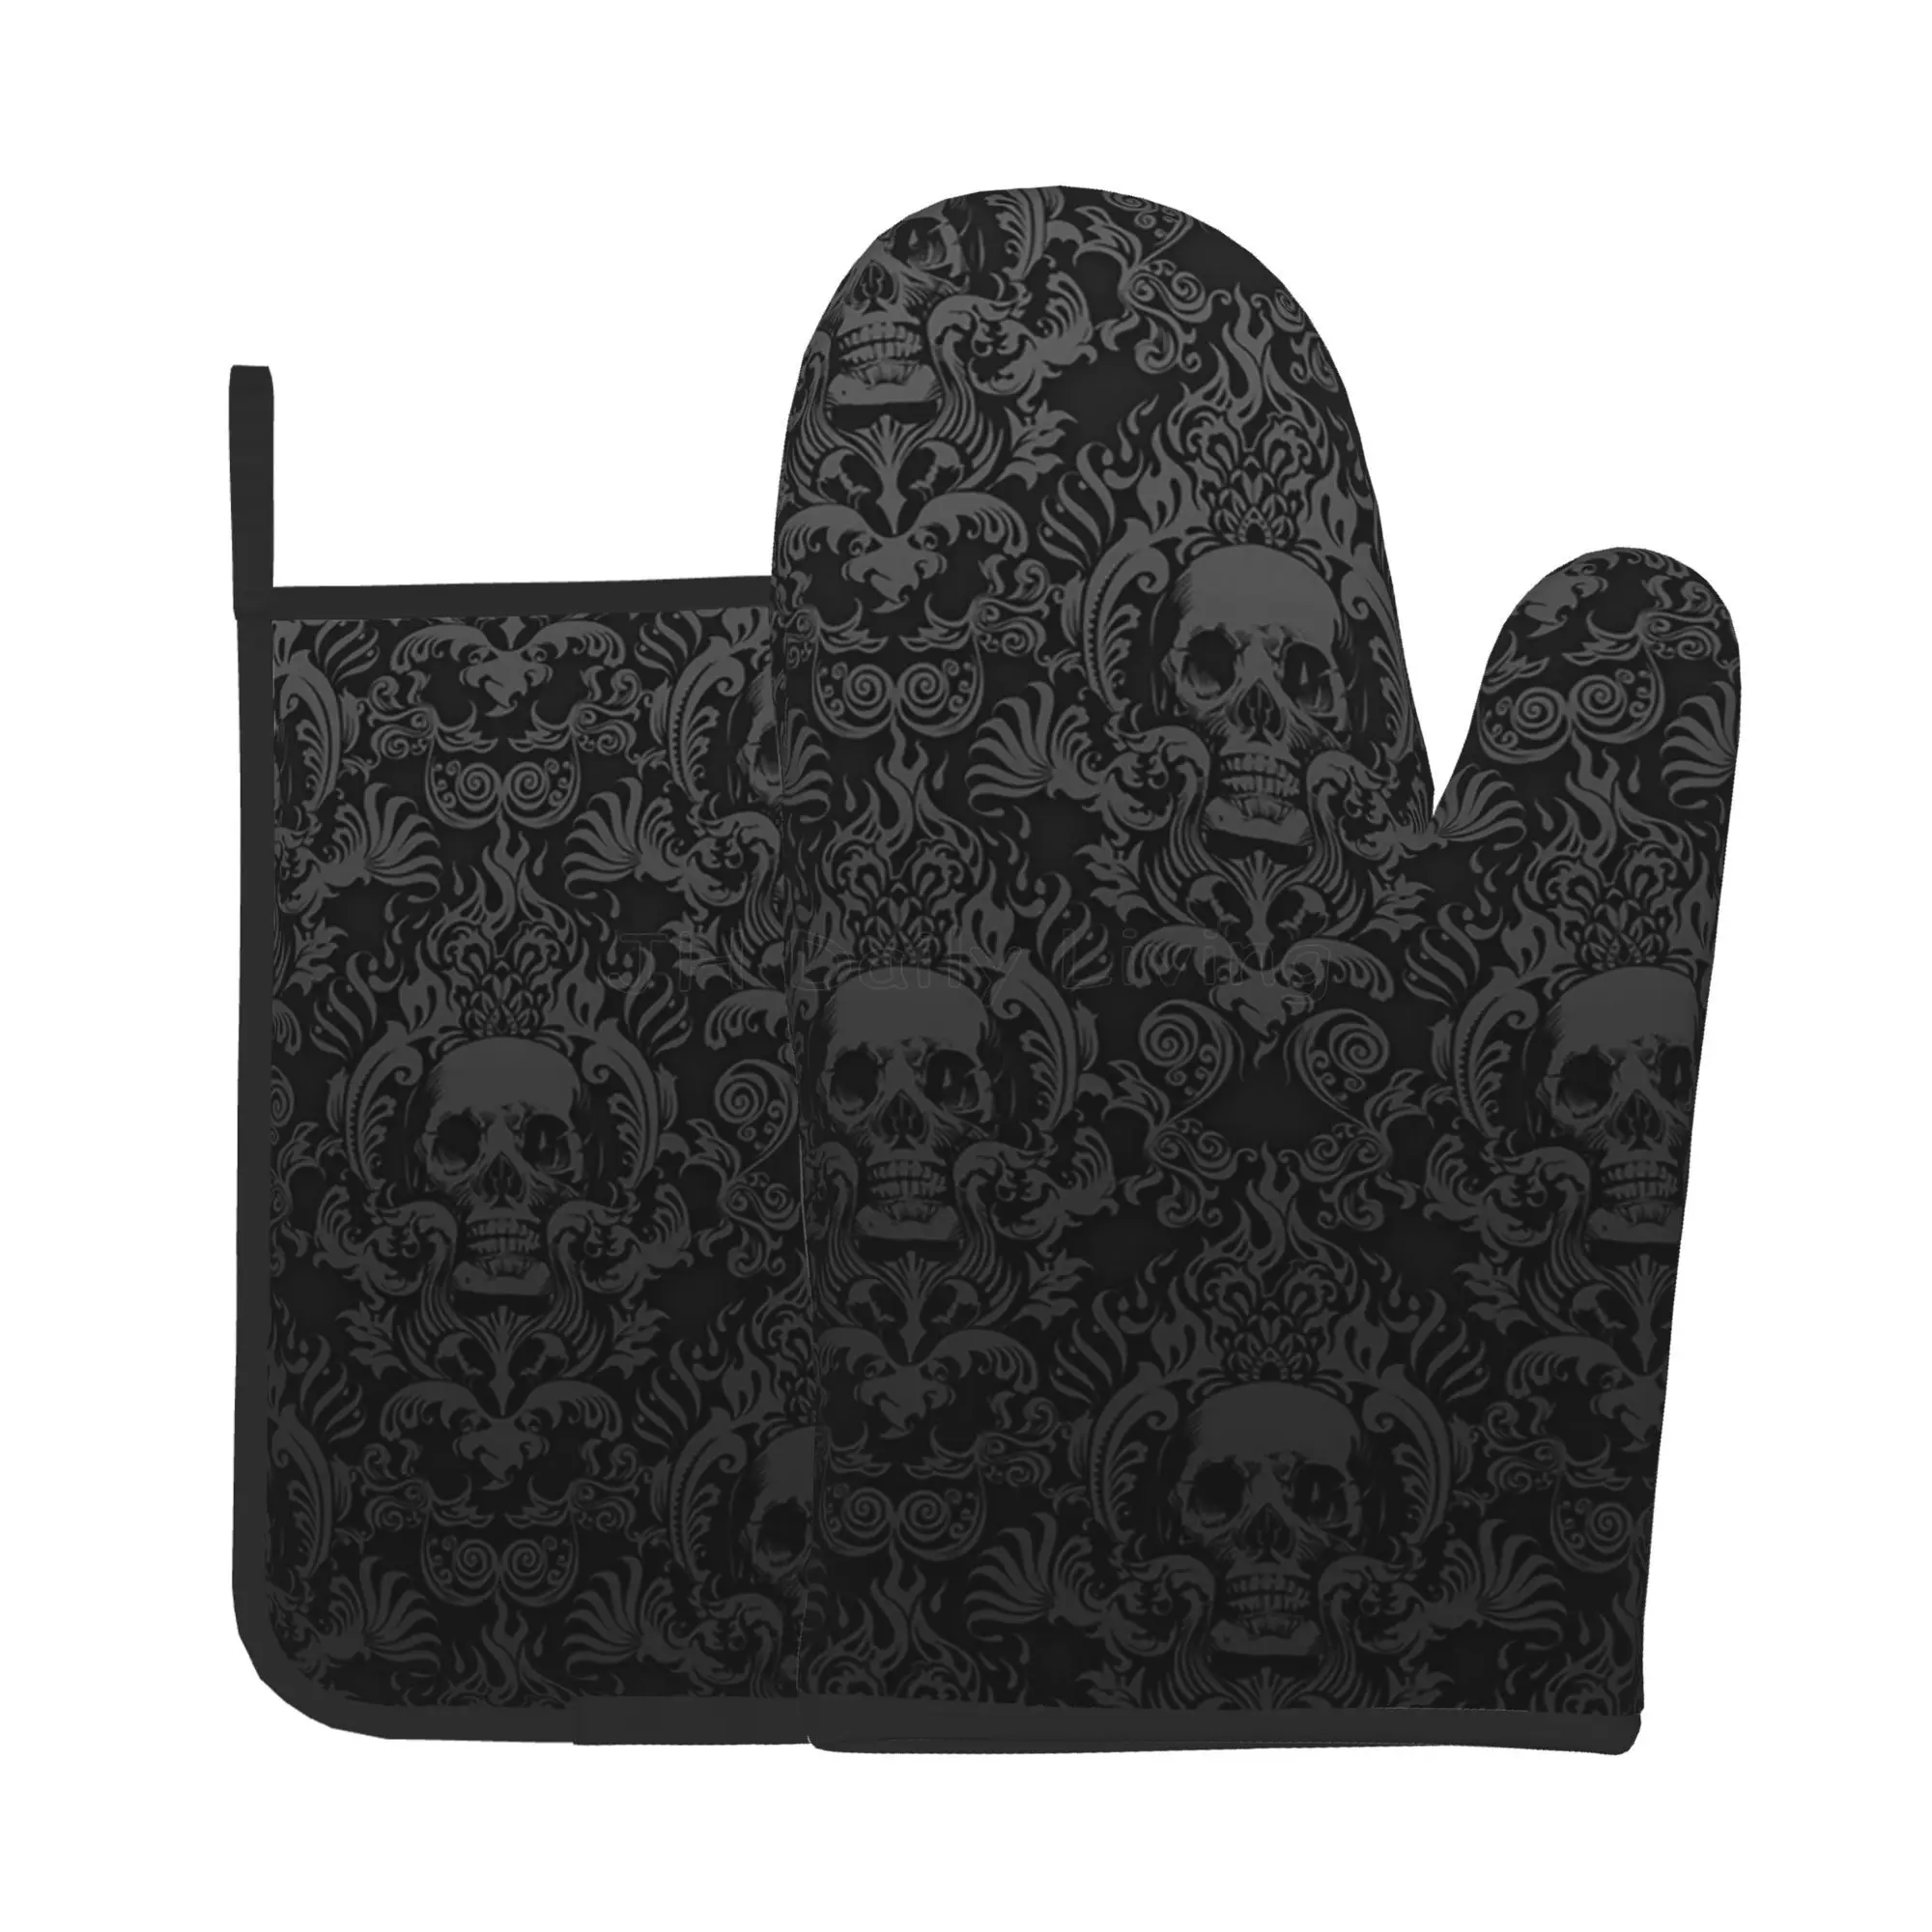 Gothic Skulls damask universal Car Seat Covers